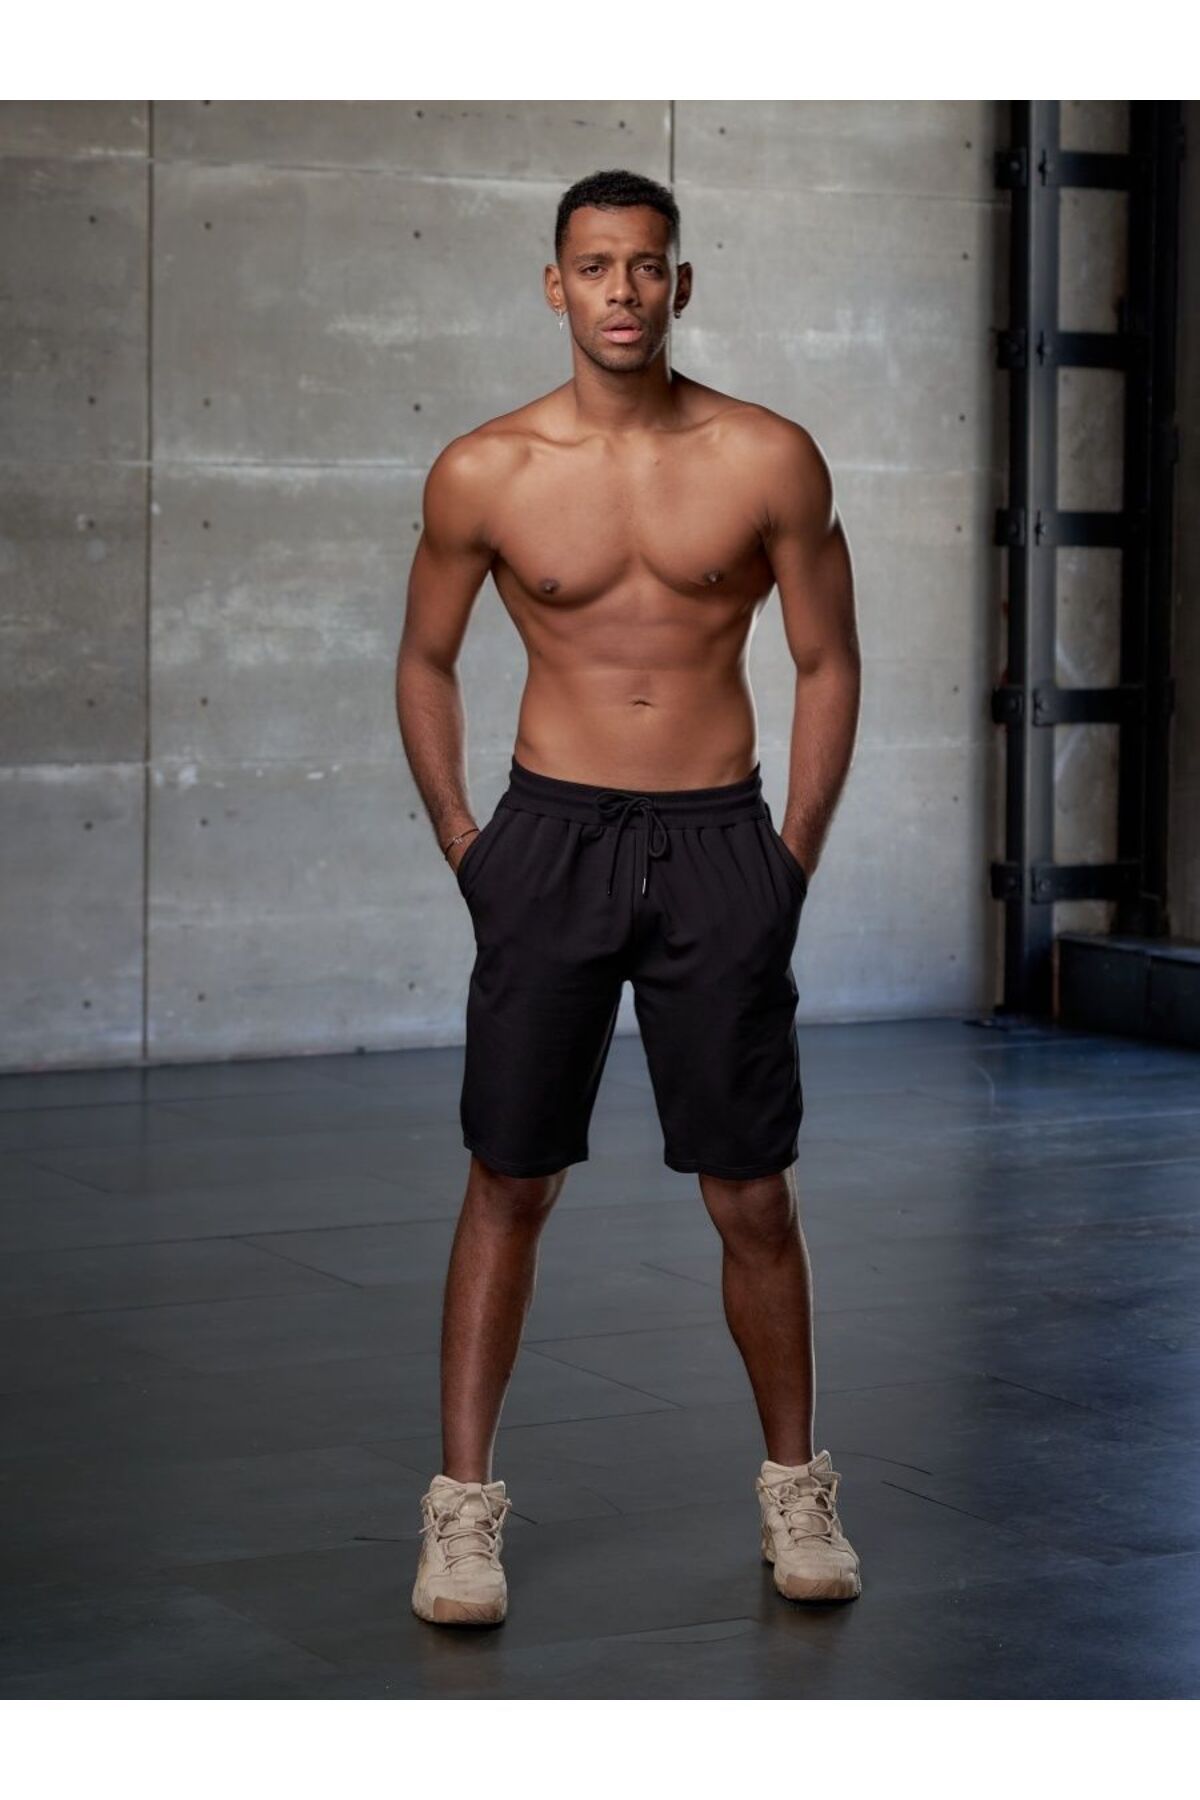 MİSTİRİK Viterbo Model Erkek Boks Şort Spor Şort Rahat Şort Hafif Penye Bol Şort Siyah Renk